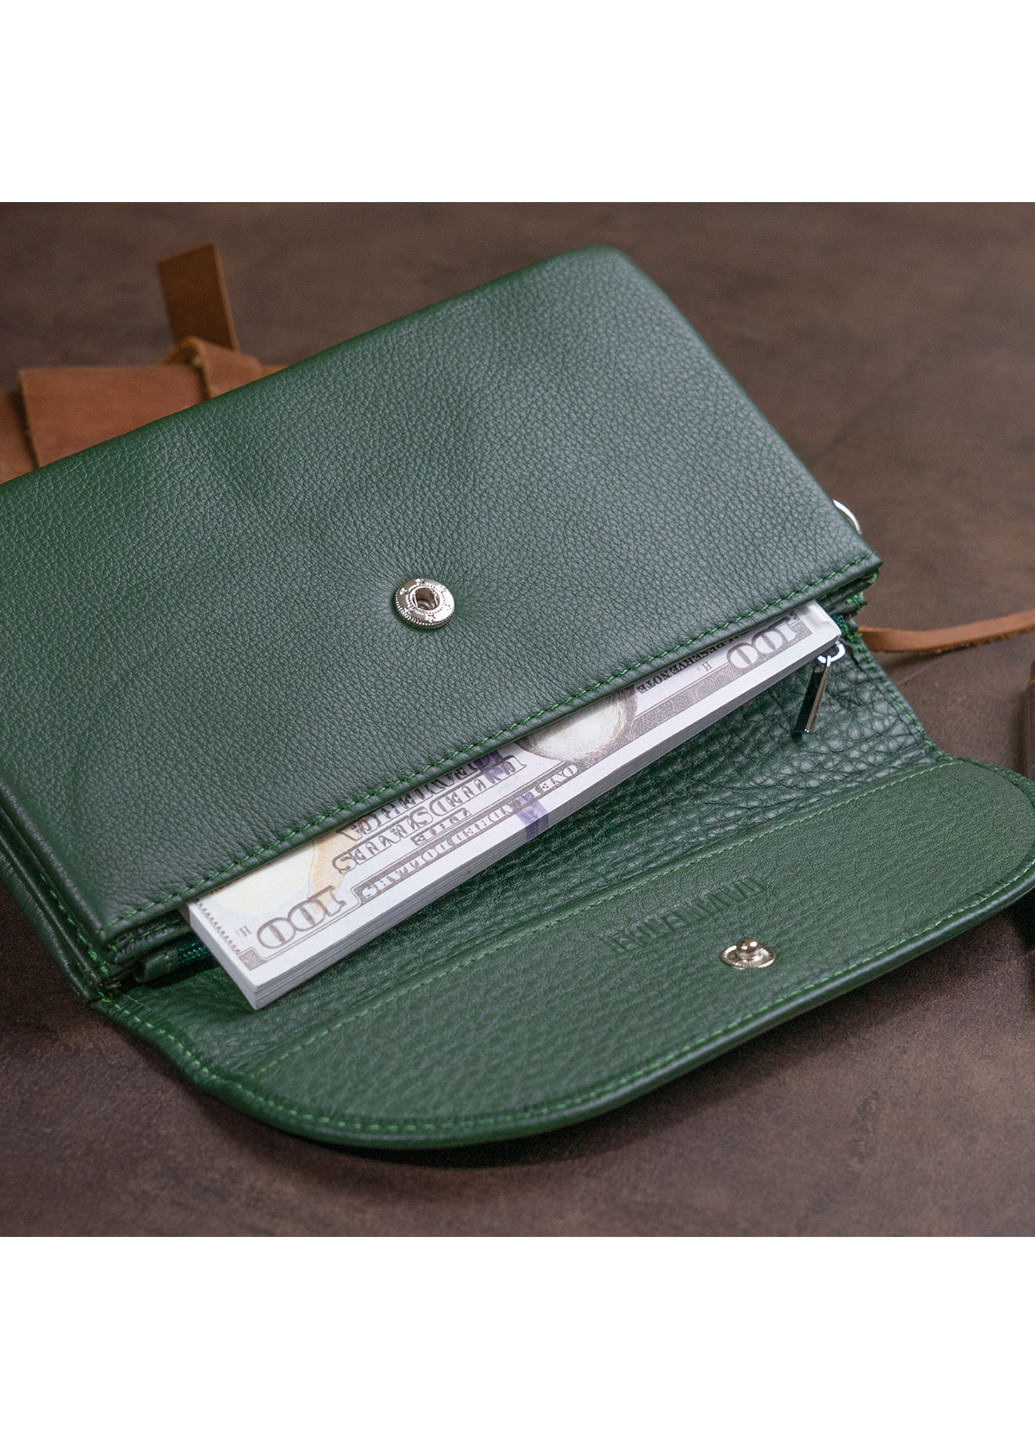 Женский кожаный кошелек-клатч 19х9,5х2,5 см st leather (229458910)